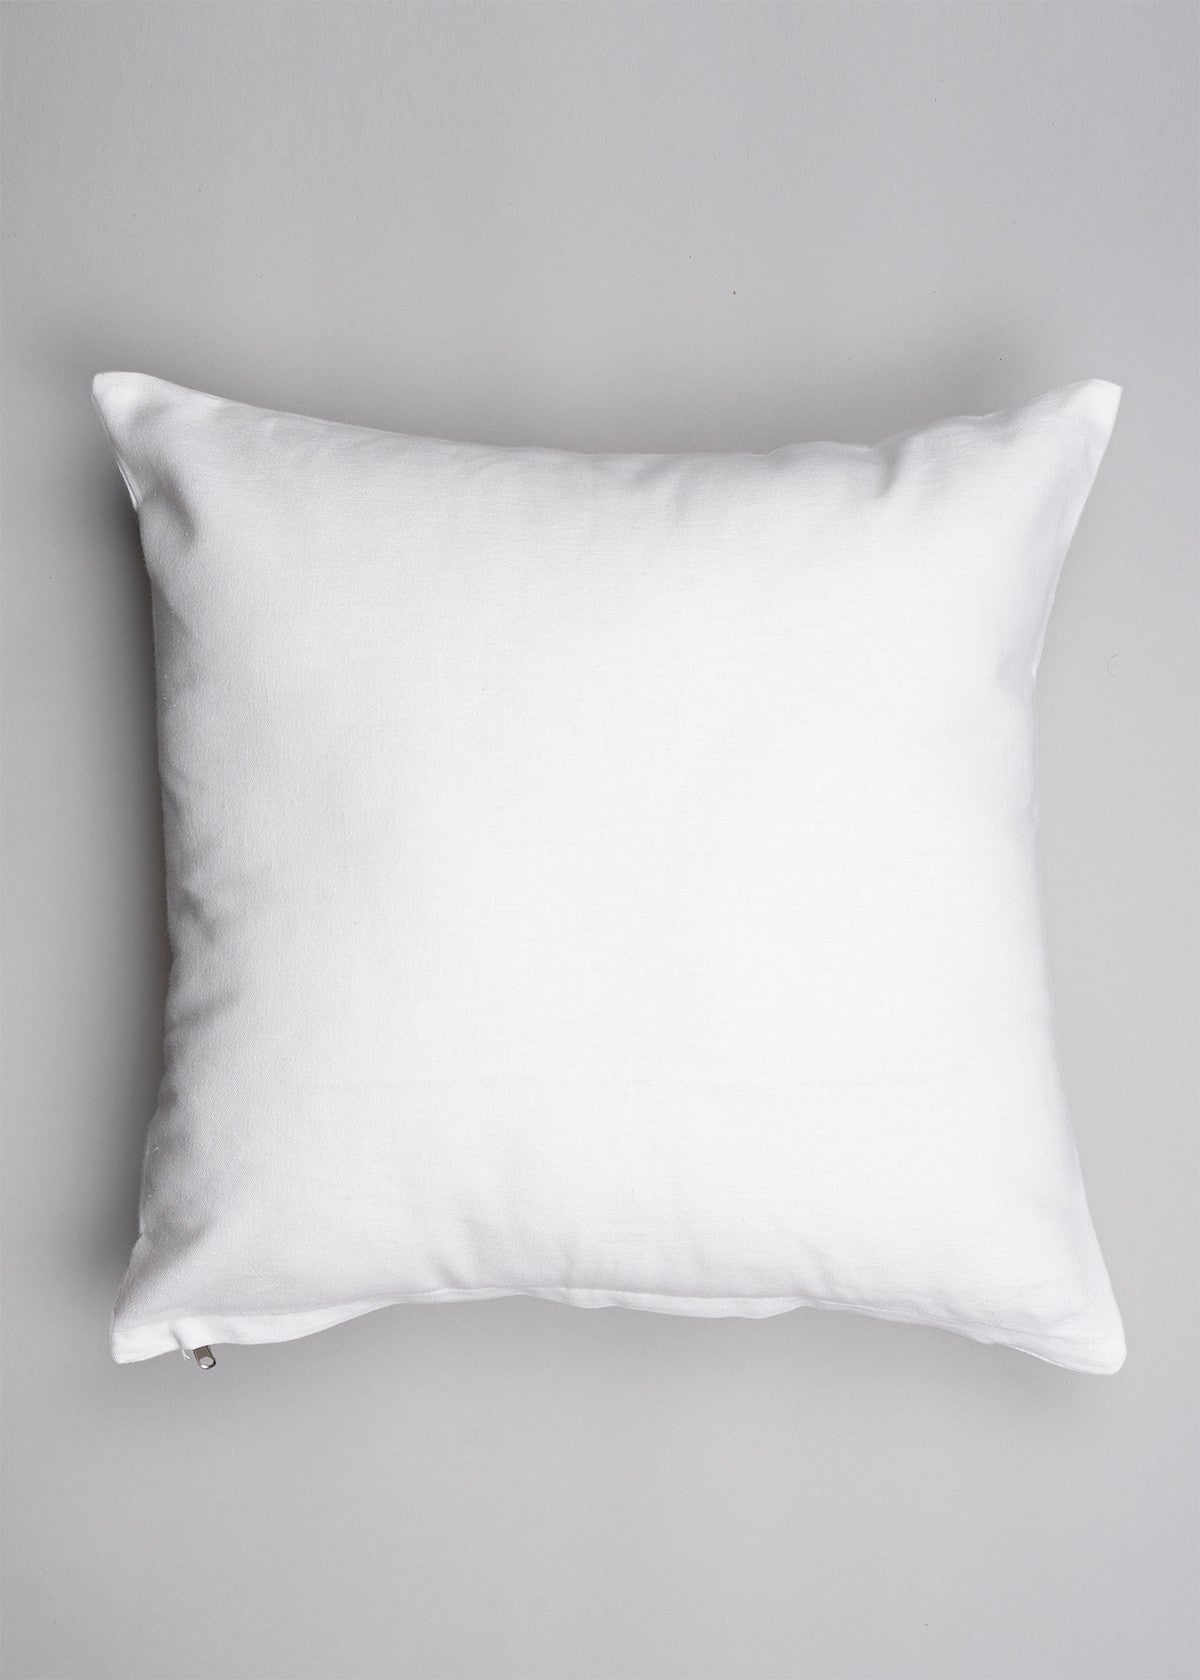 Mystique Marigold 100% cotton embroidered decorative cushion cover for sofa - Green